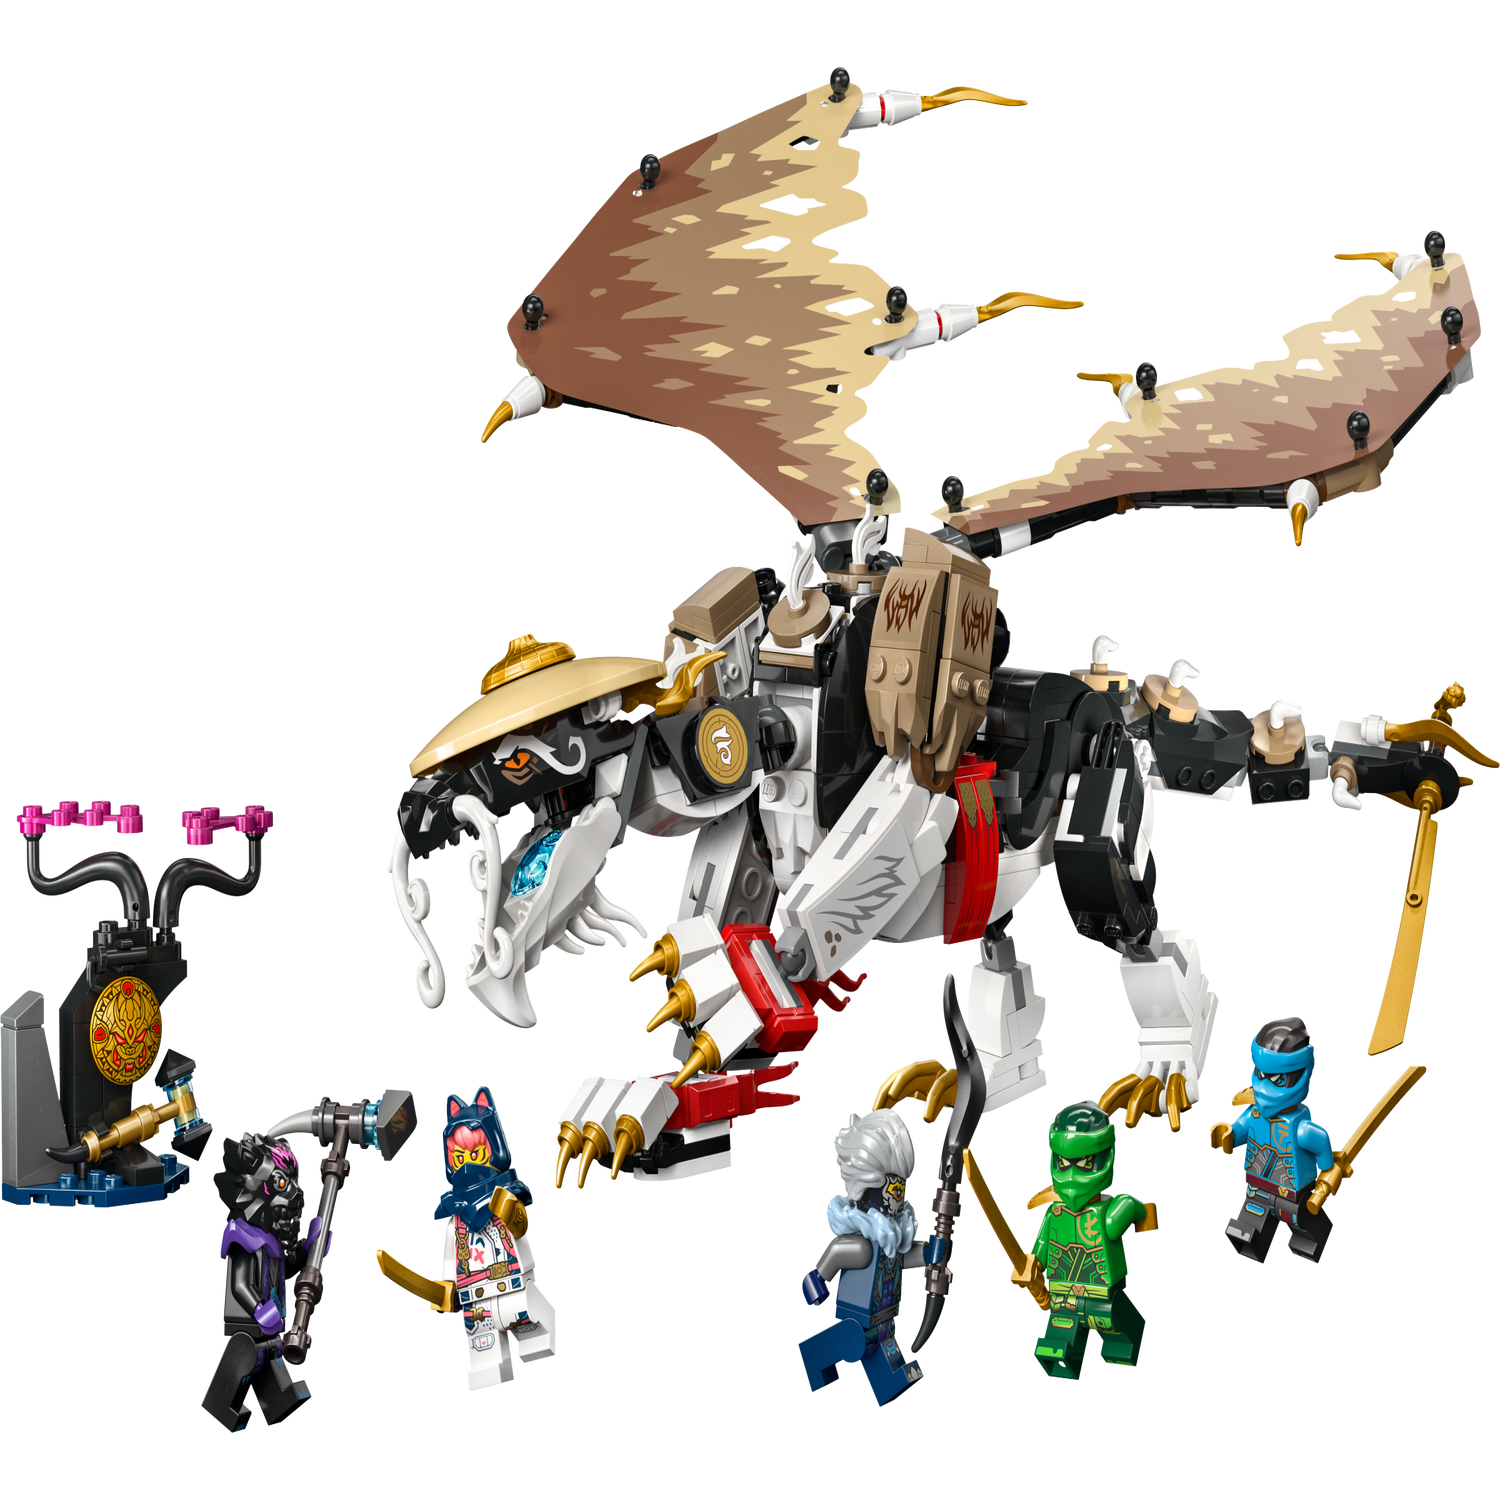 Egalt the Master Dragon 71809 | NINJAGO® | Buy online at the Official LEGO®  Shop US